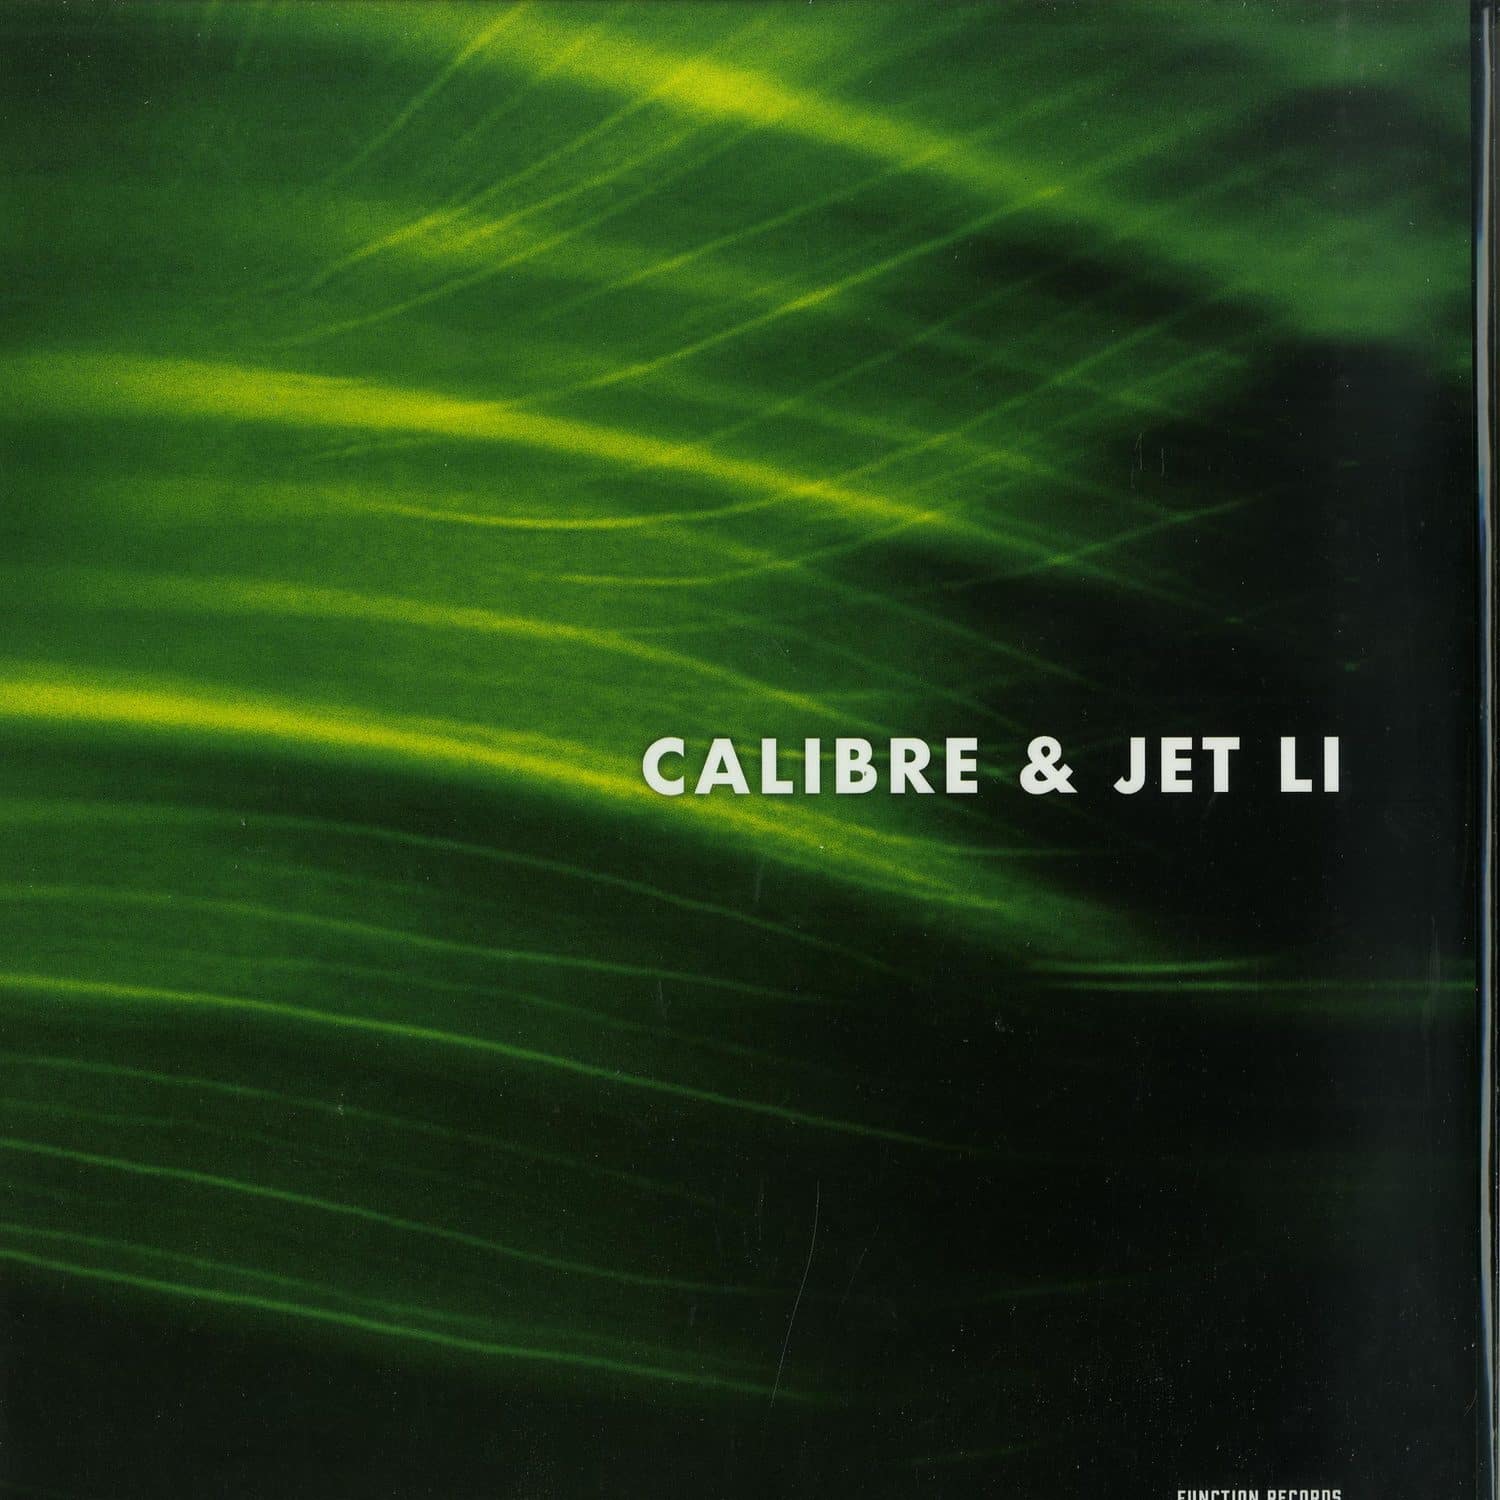 Calibre ft. Jet Li - PUSH THROUGH IT / TREES IN THE WIND